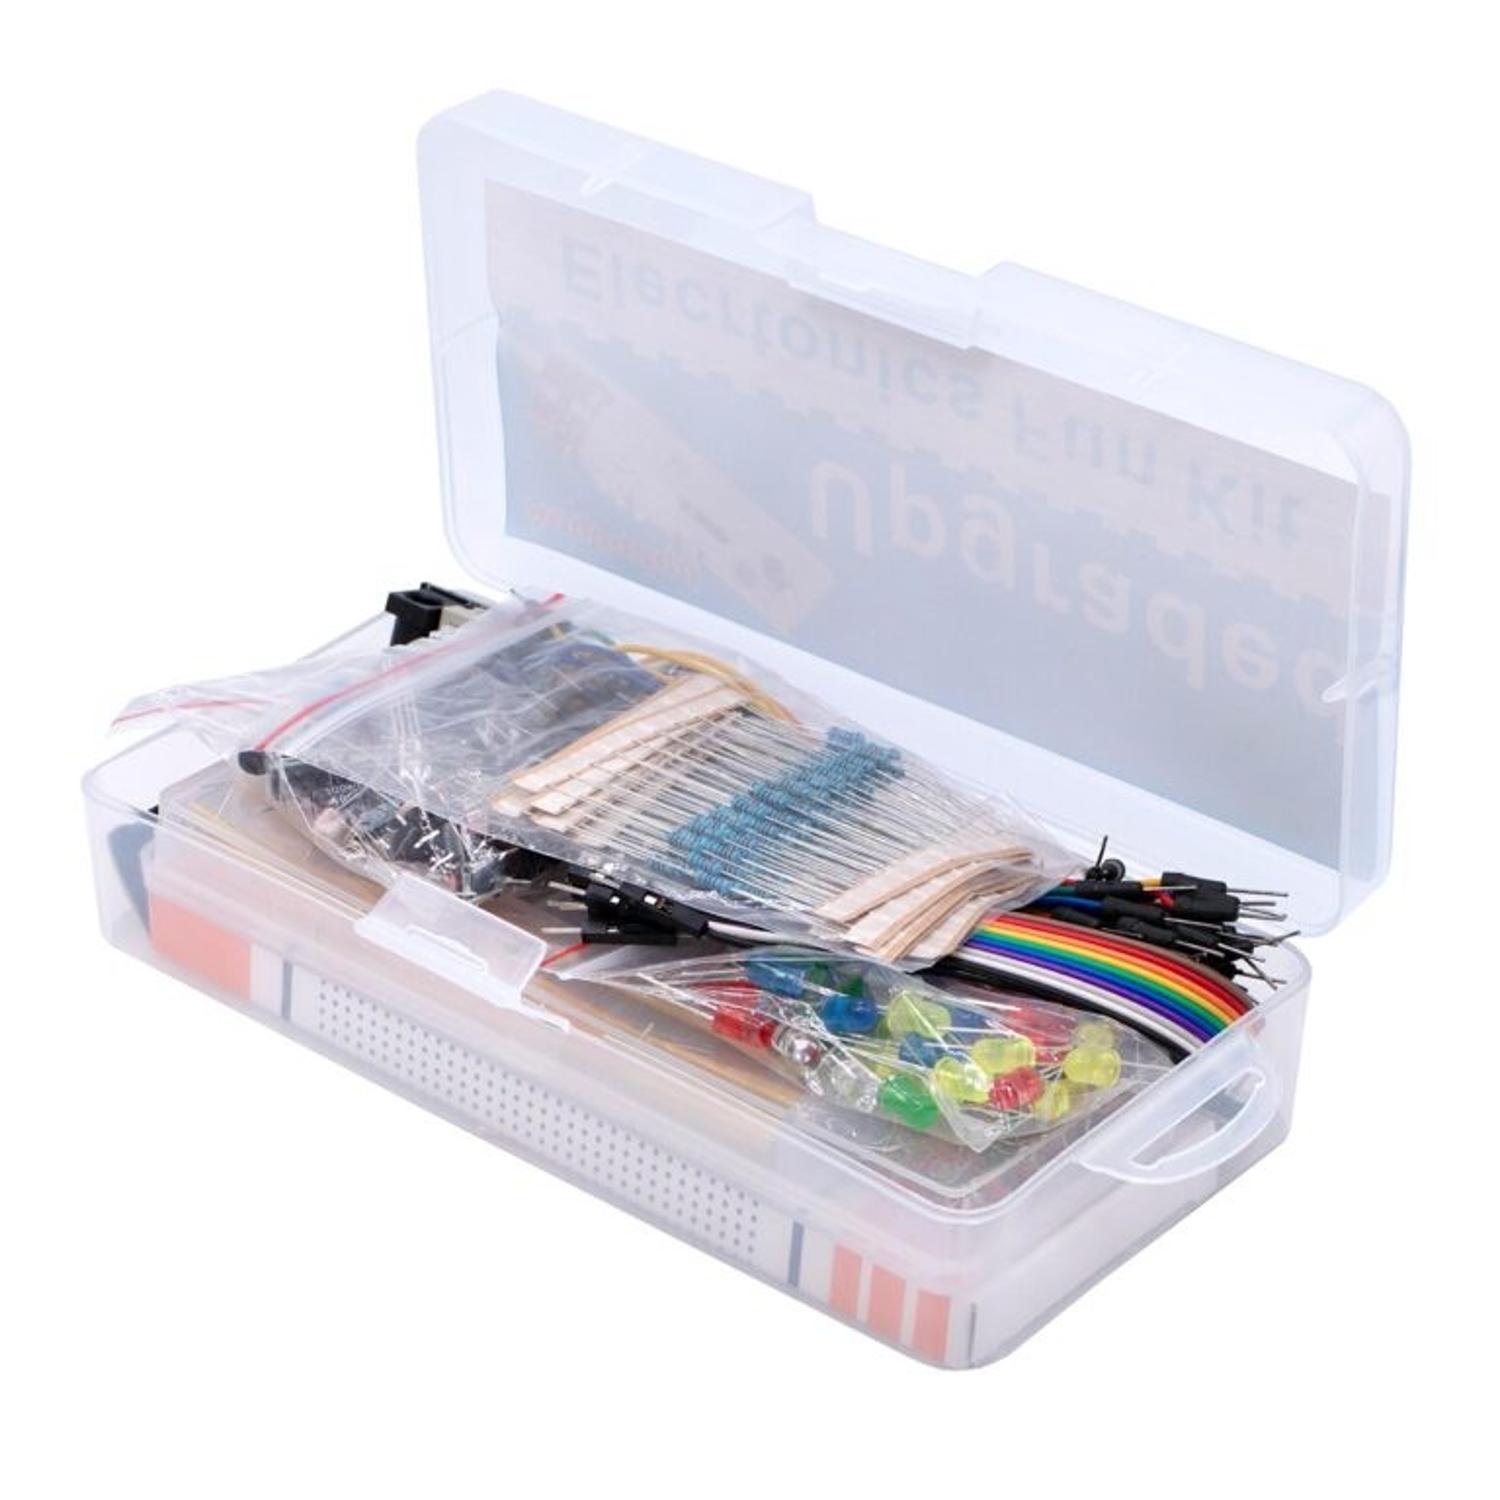 Kit Basico Componentes Electrónicos para Arduino y Raspberry Pi